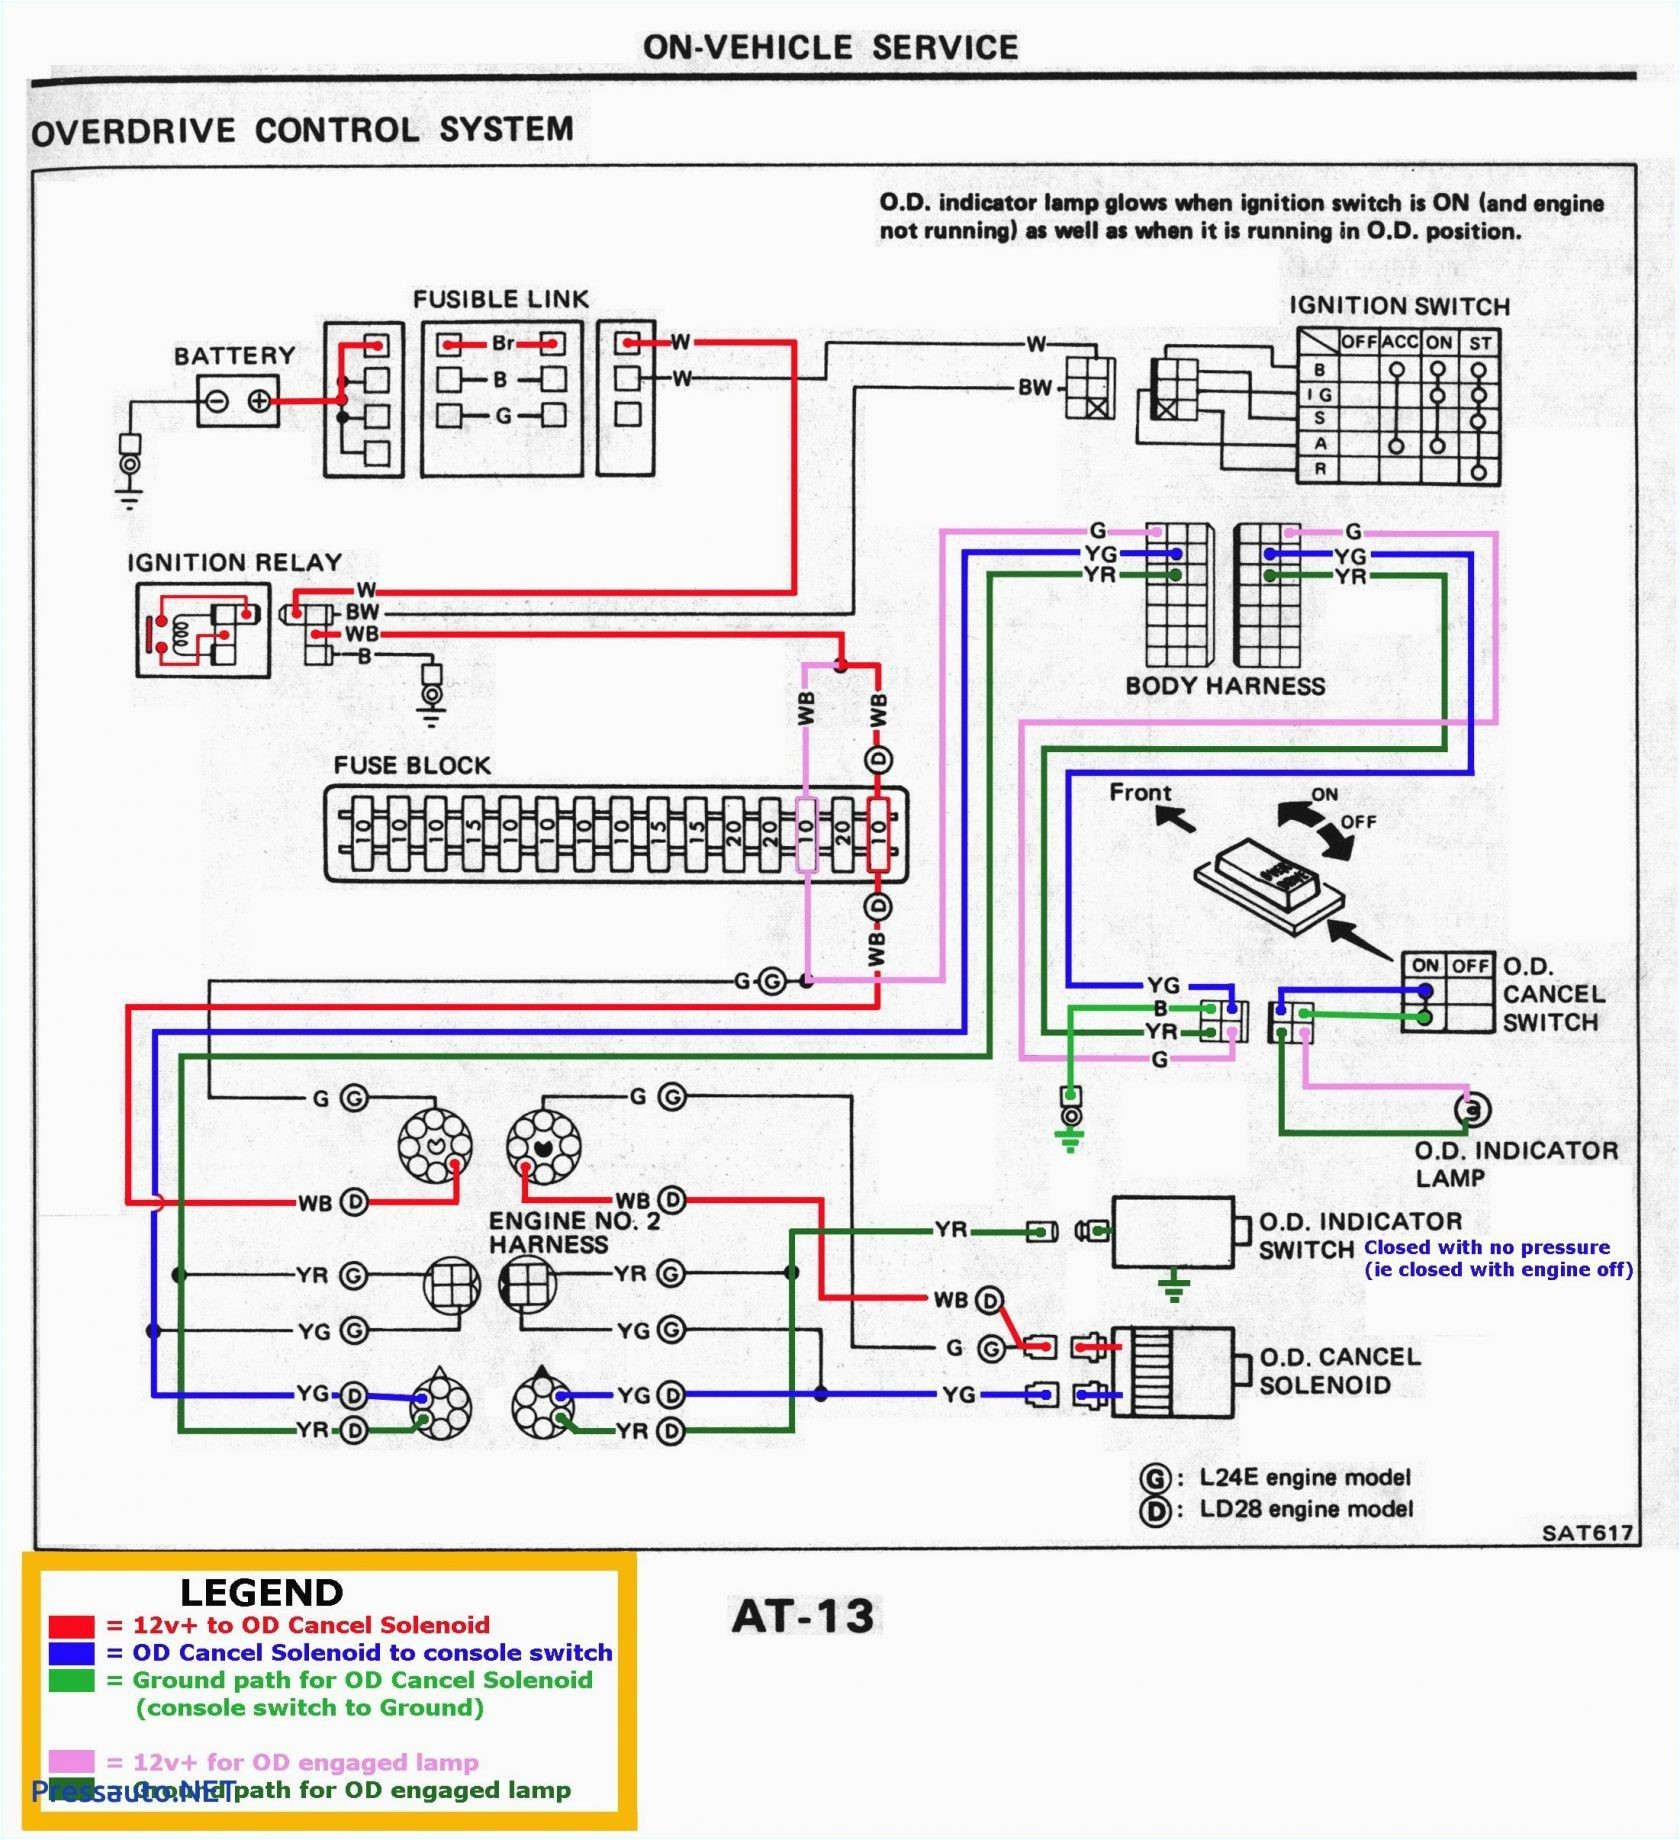 phototransistor circuit basiccircuit circuit diagram seekiccom new by phototransistor controlcircuit circuit diagram seekiccom